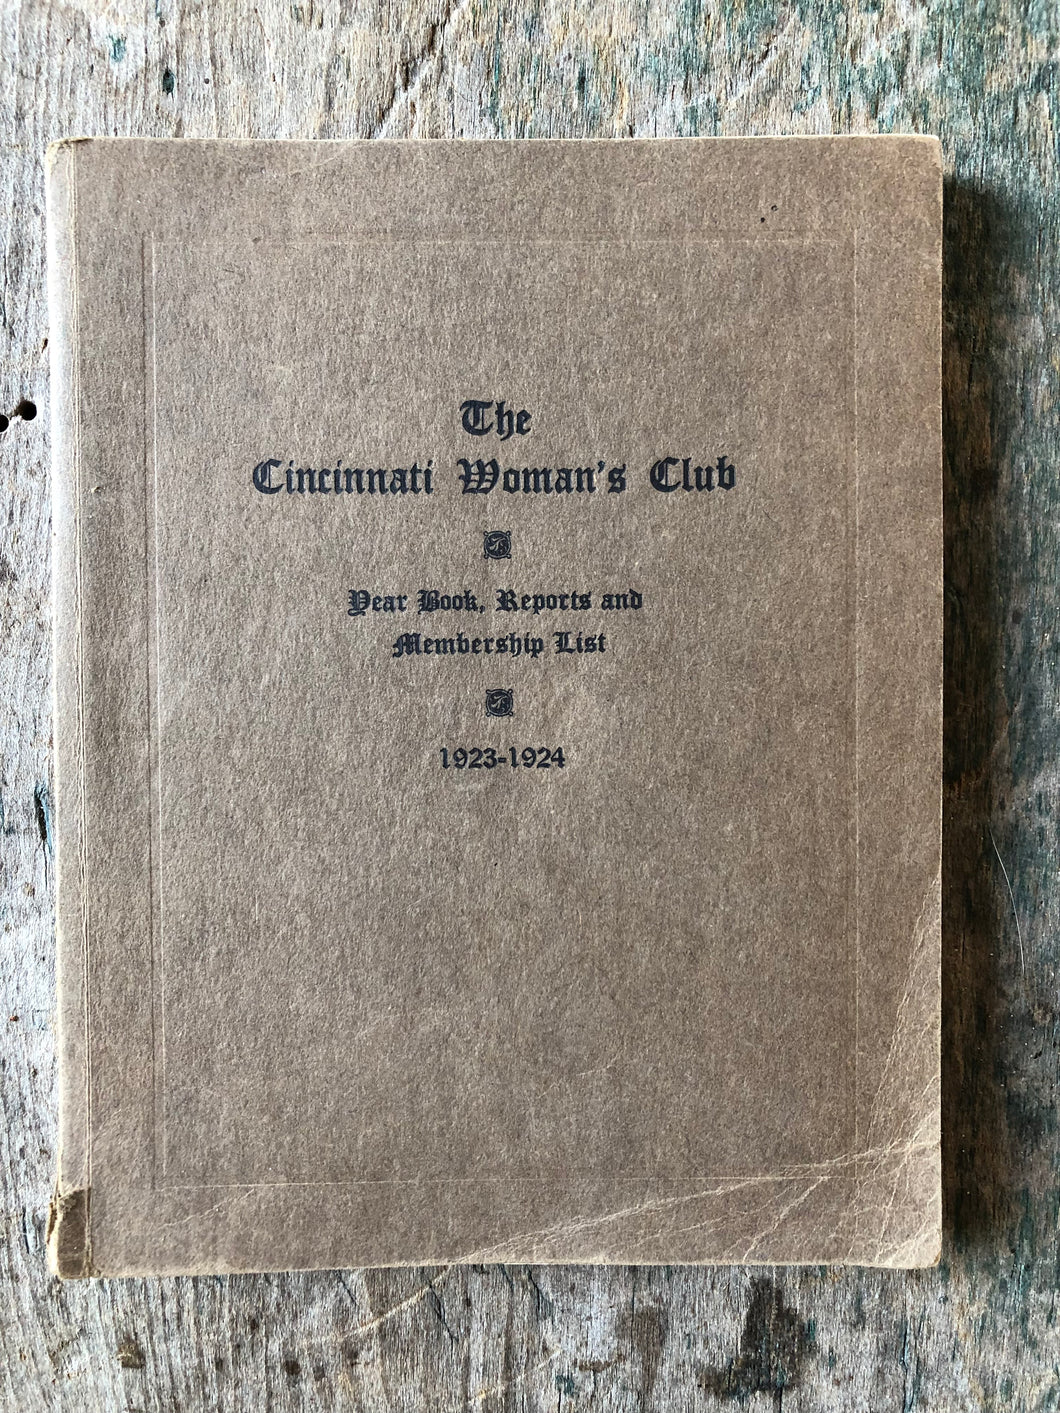 The Cincinnati Woman's Club: Yearbook, Reports and Membership List, 1923-1924